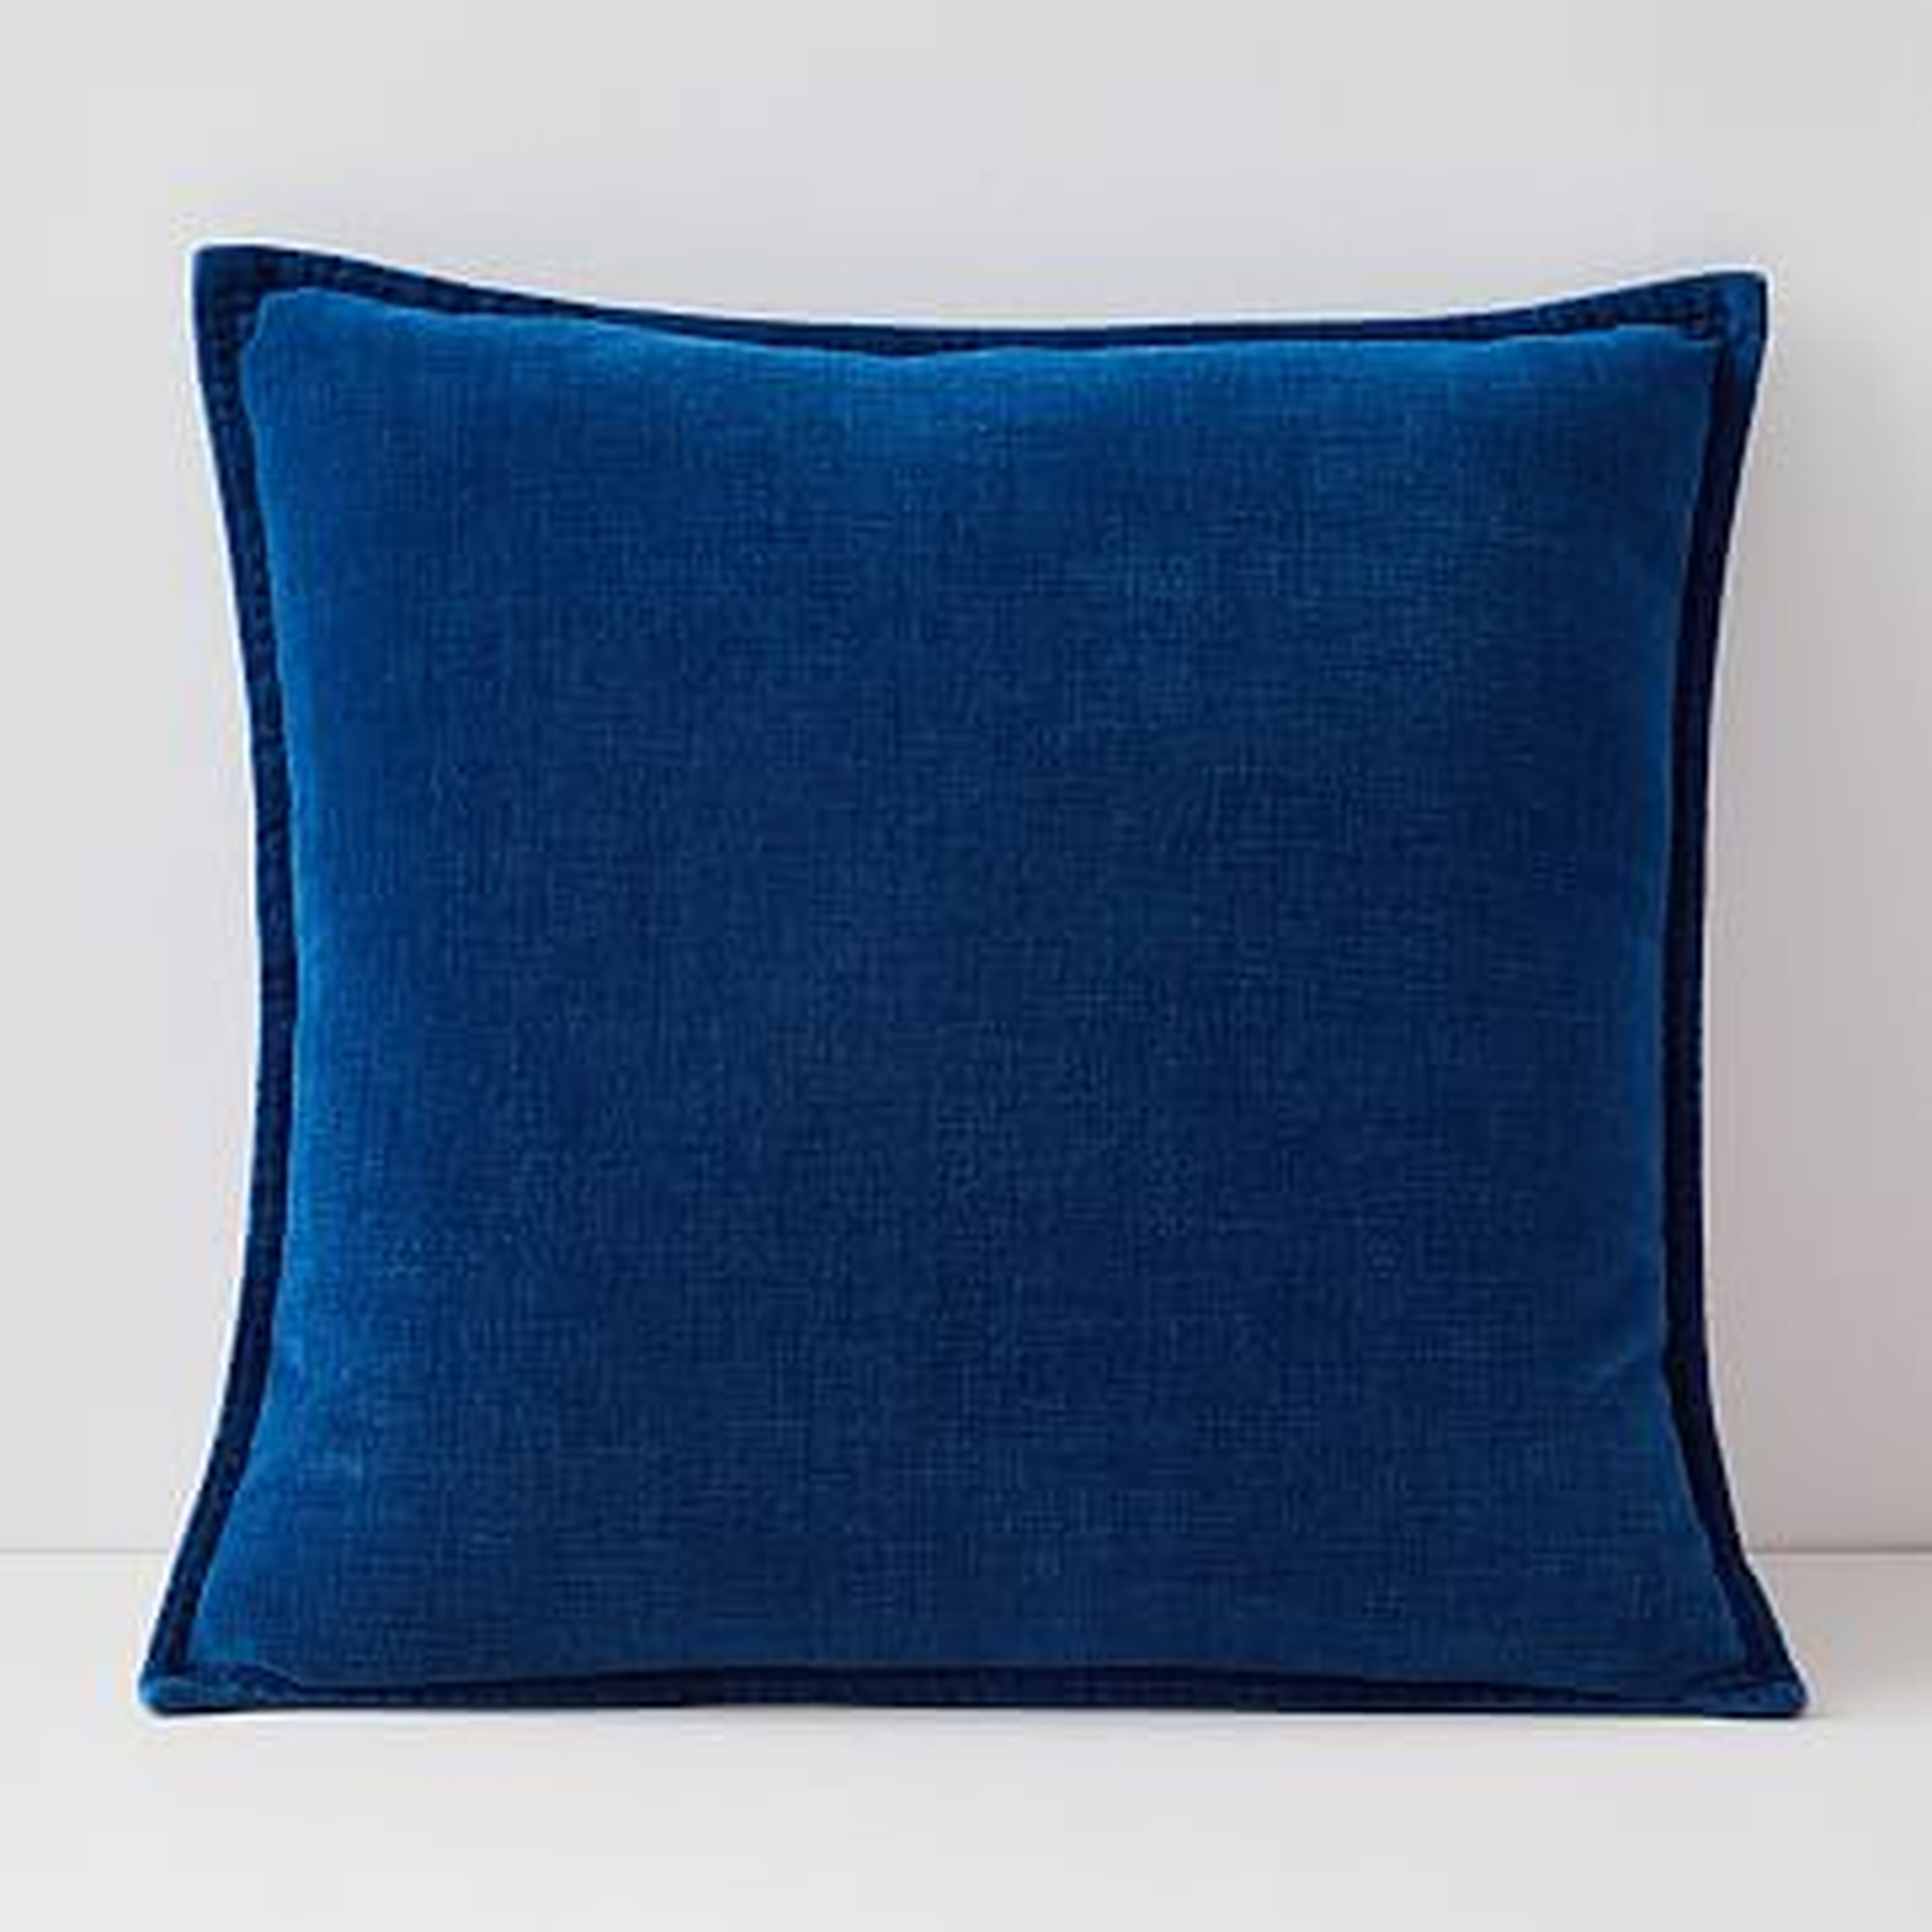 Velvet Azure Pillow Cover, Set of 2, 20"x20", Medium Washed - West Elm